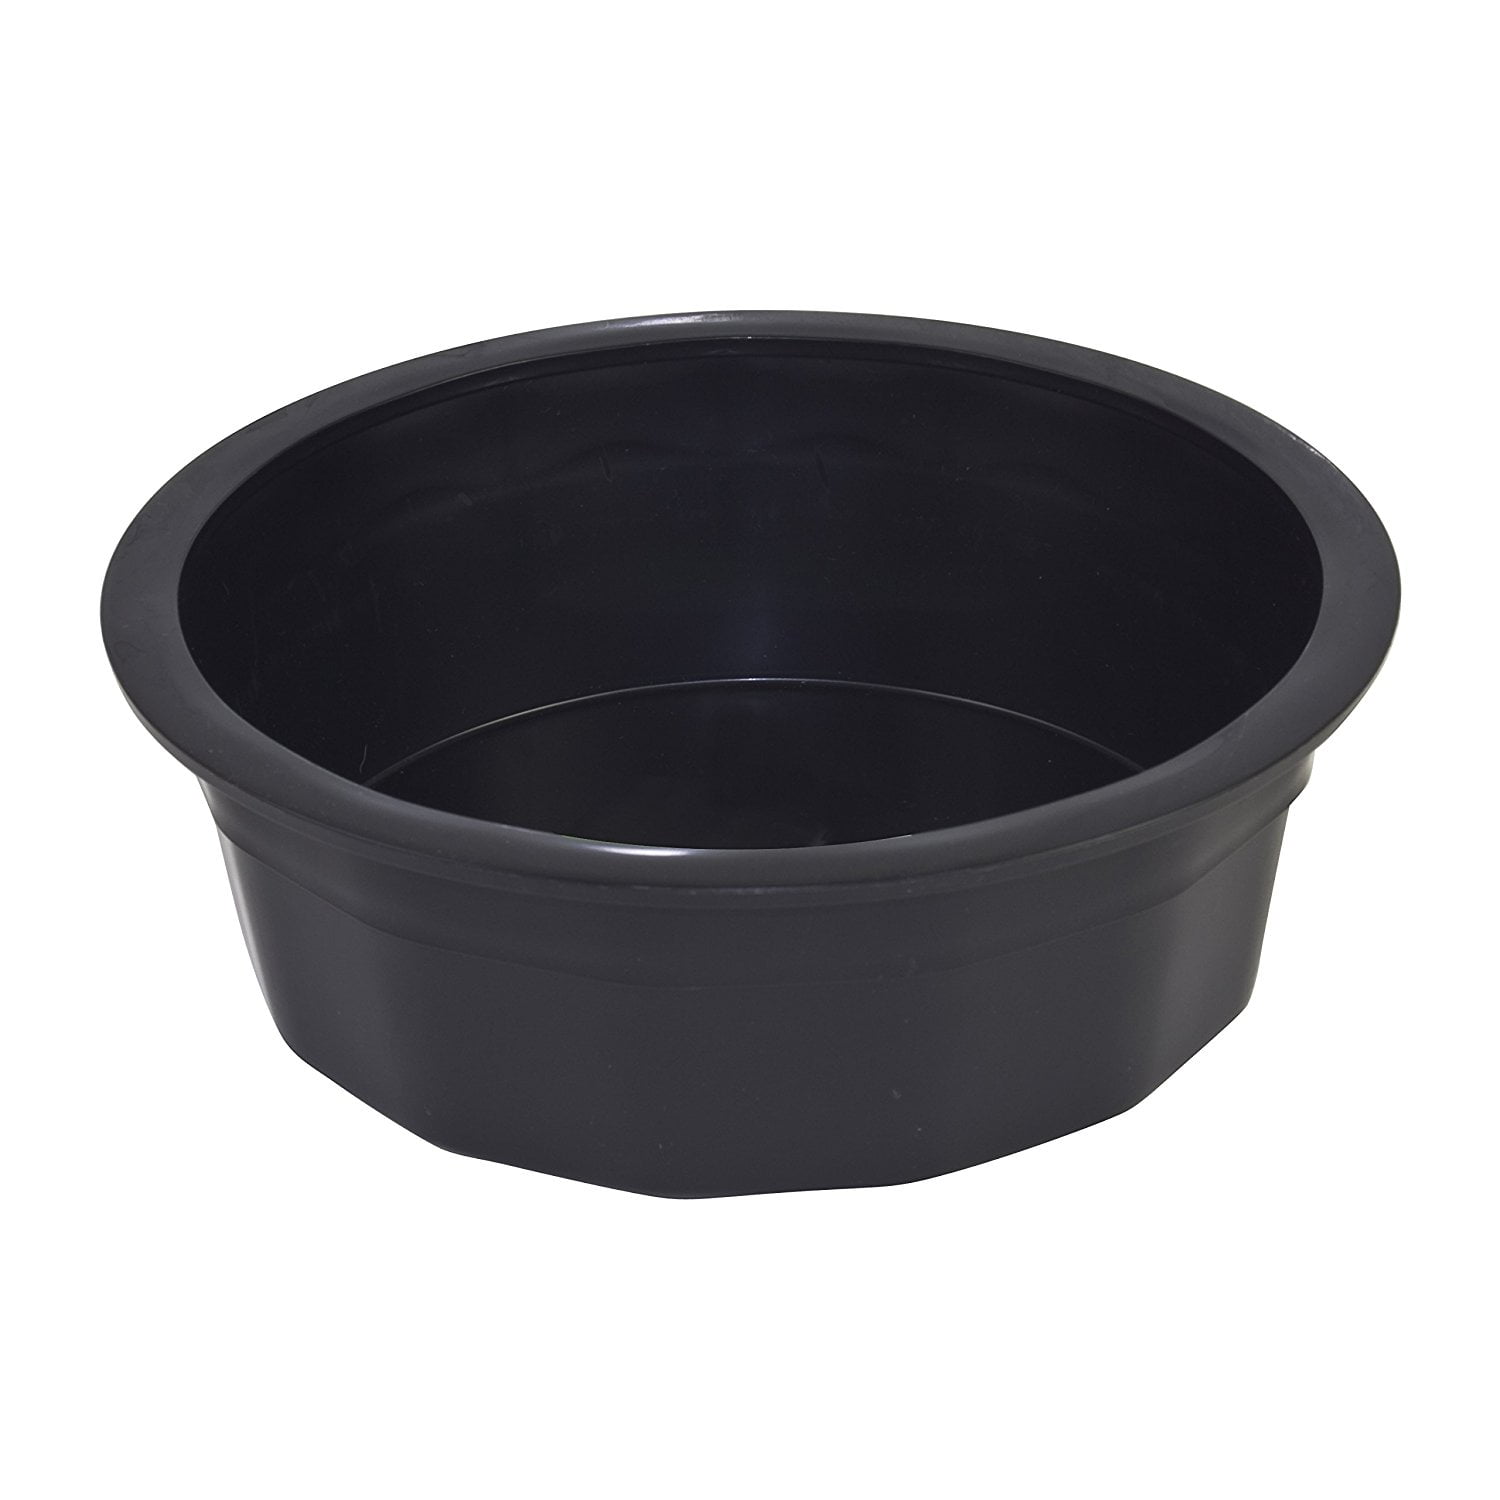 Vibrant Life Large Crock Dog Bowl, Black, Size: Large, 13.25 Cup